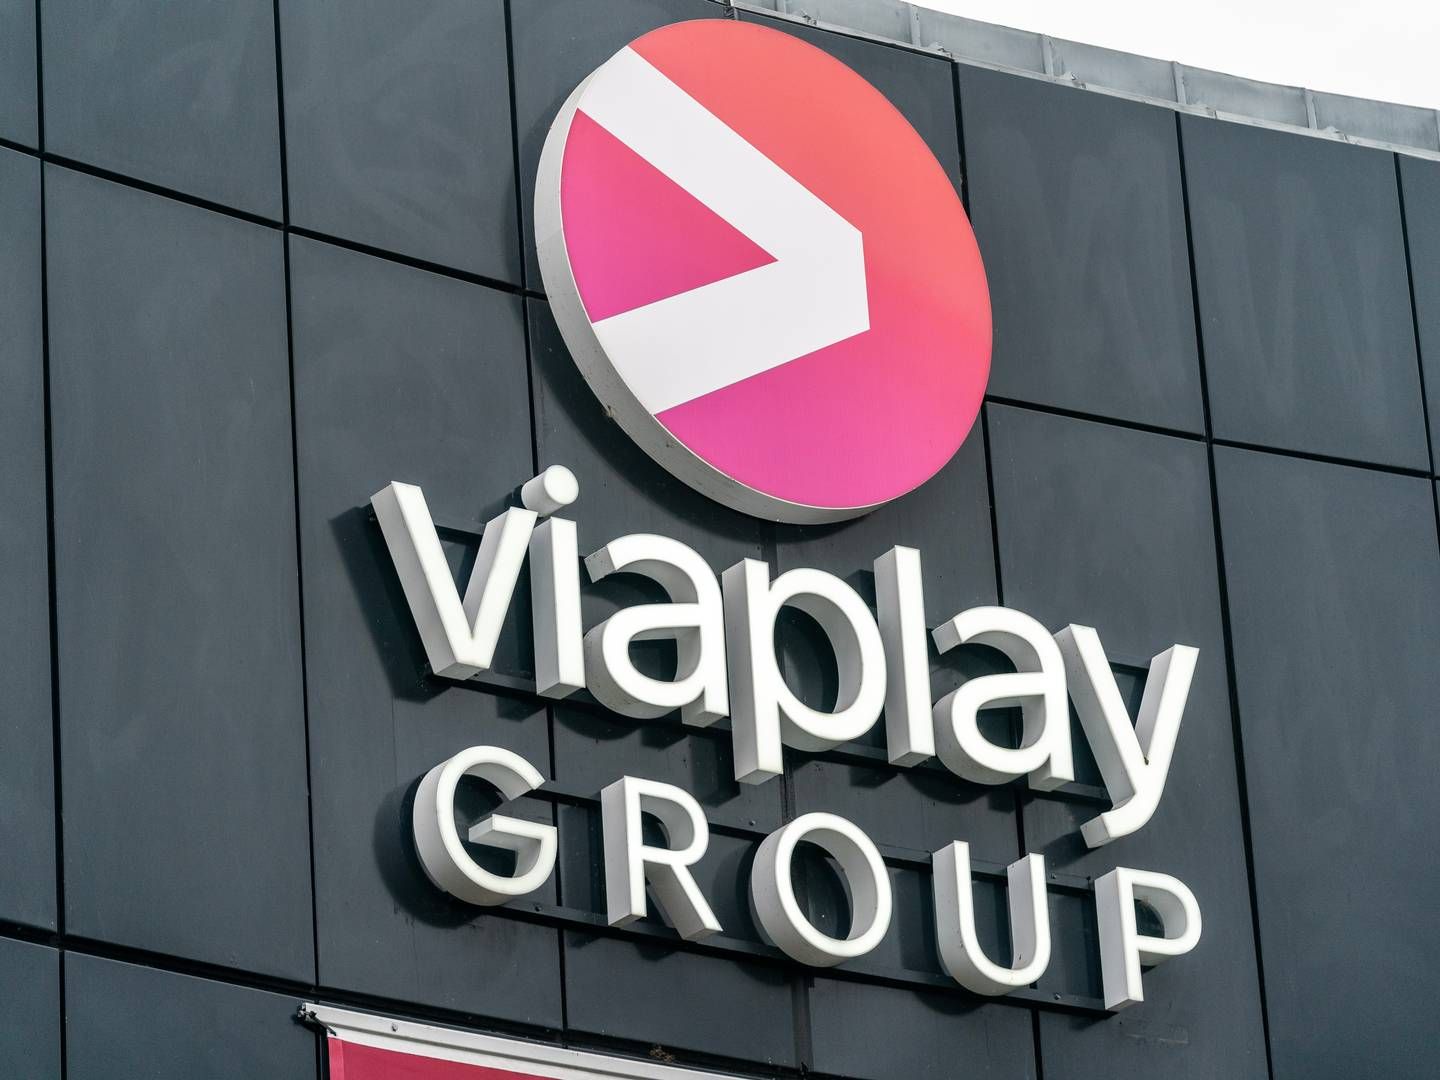 Viaplay Group er hovedpersonen i denne uges beretning om Mediedanmark. | Foto: Rasmus Flindt Pedersen/Ritzau Scanpix.